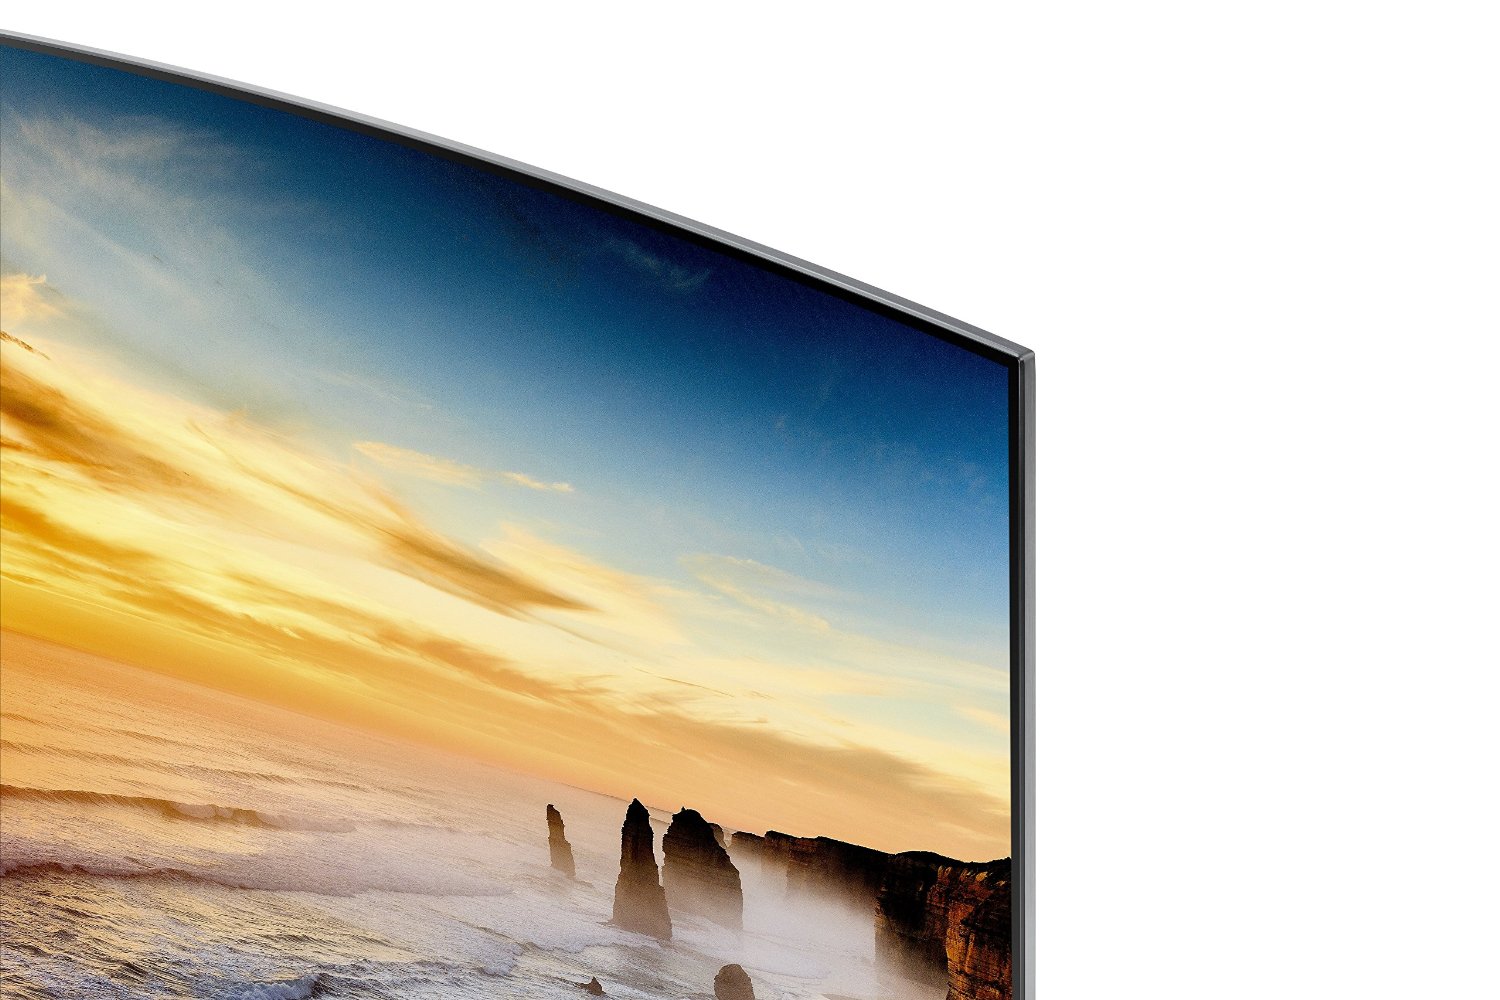 Samsung KS9800 4K Ultra HD TV First Look | Digital Trends